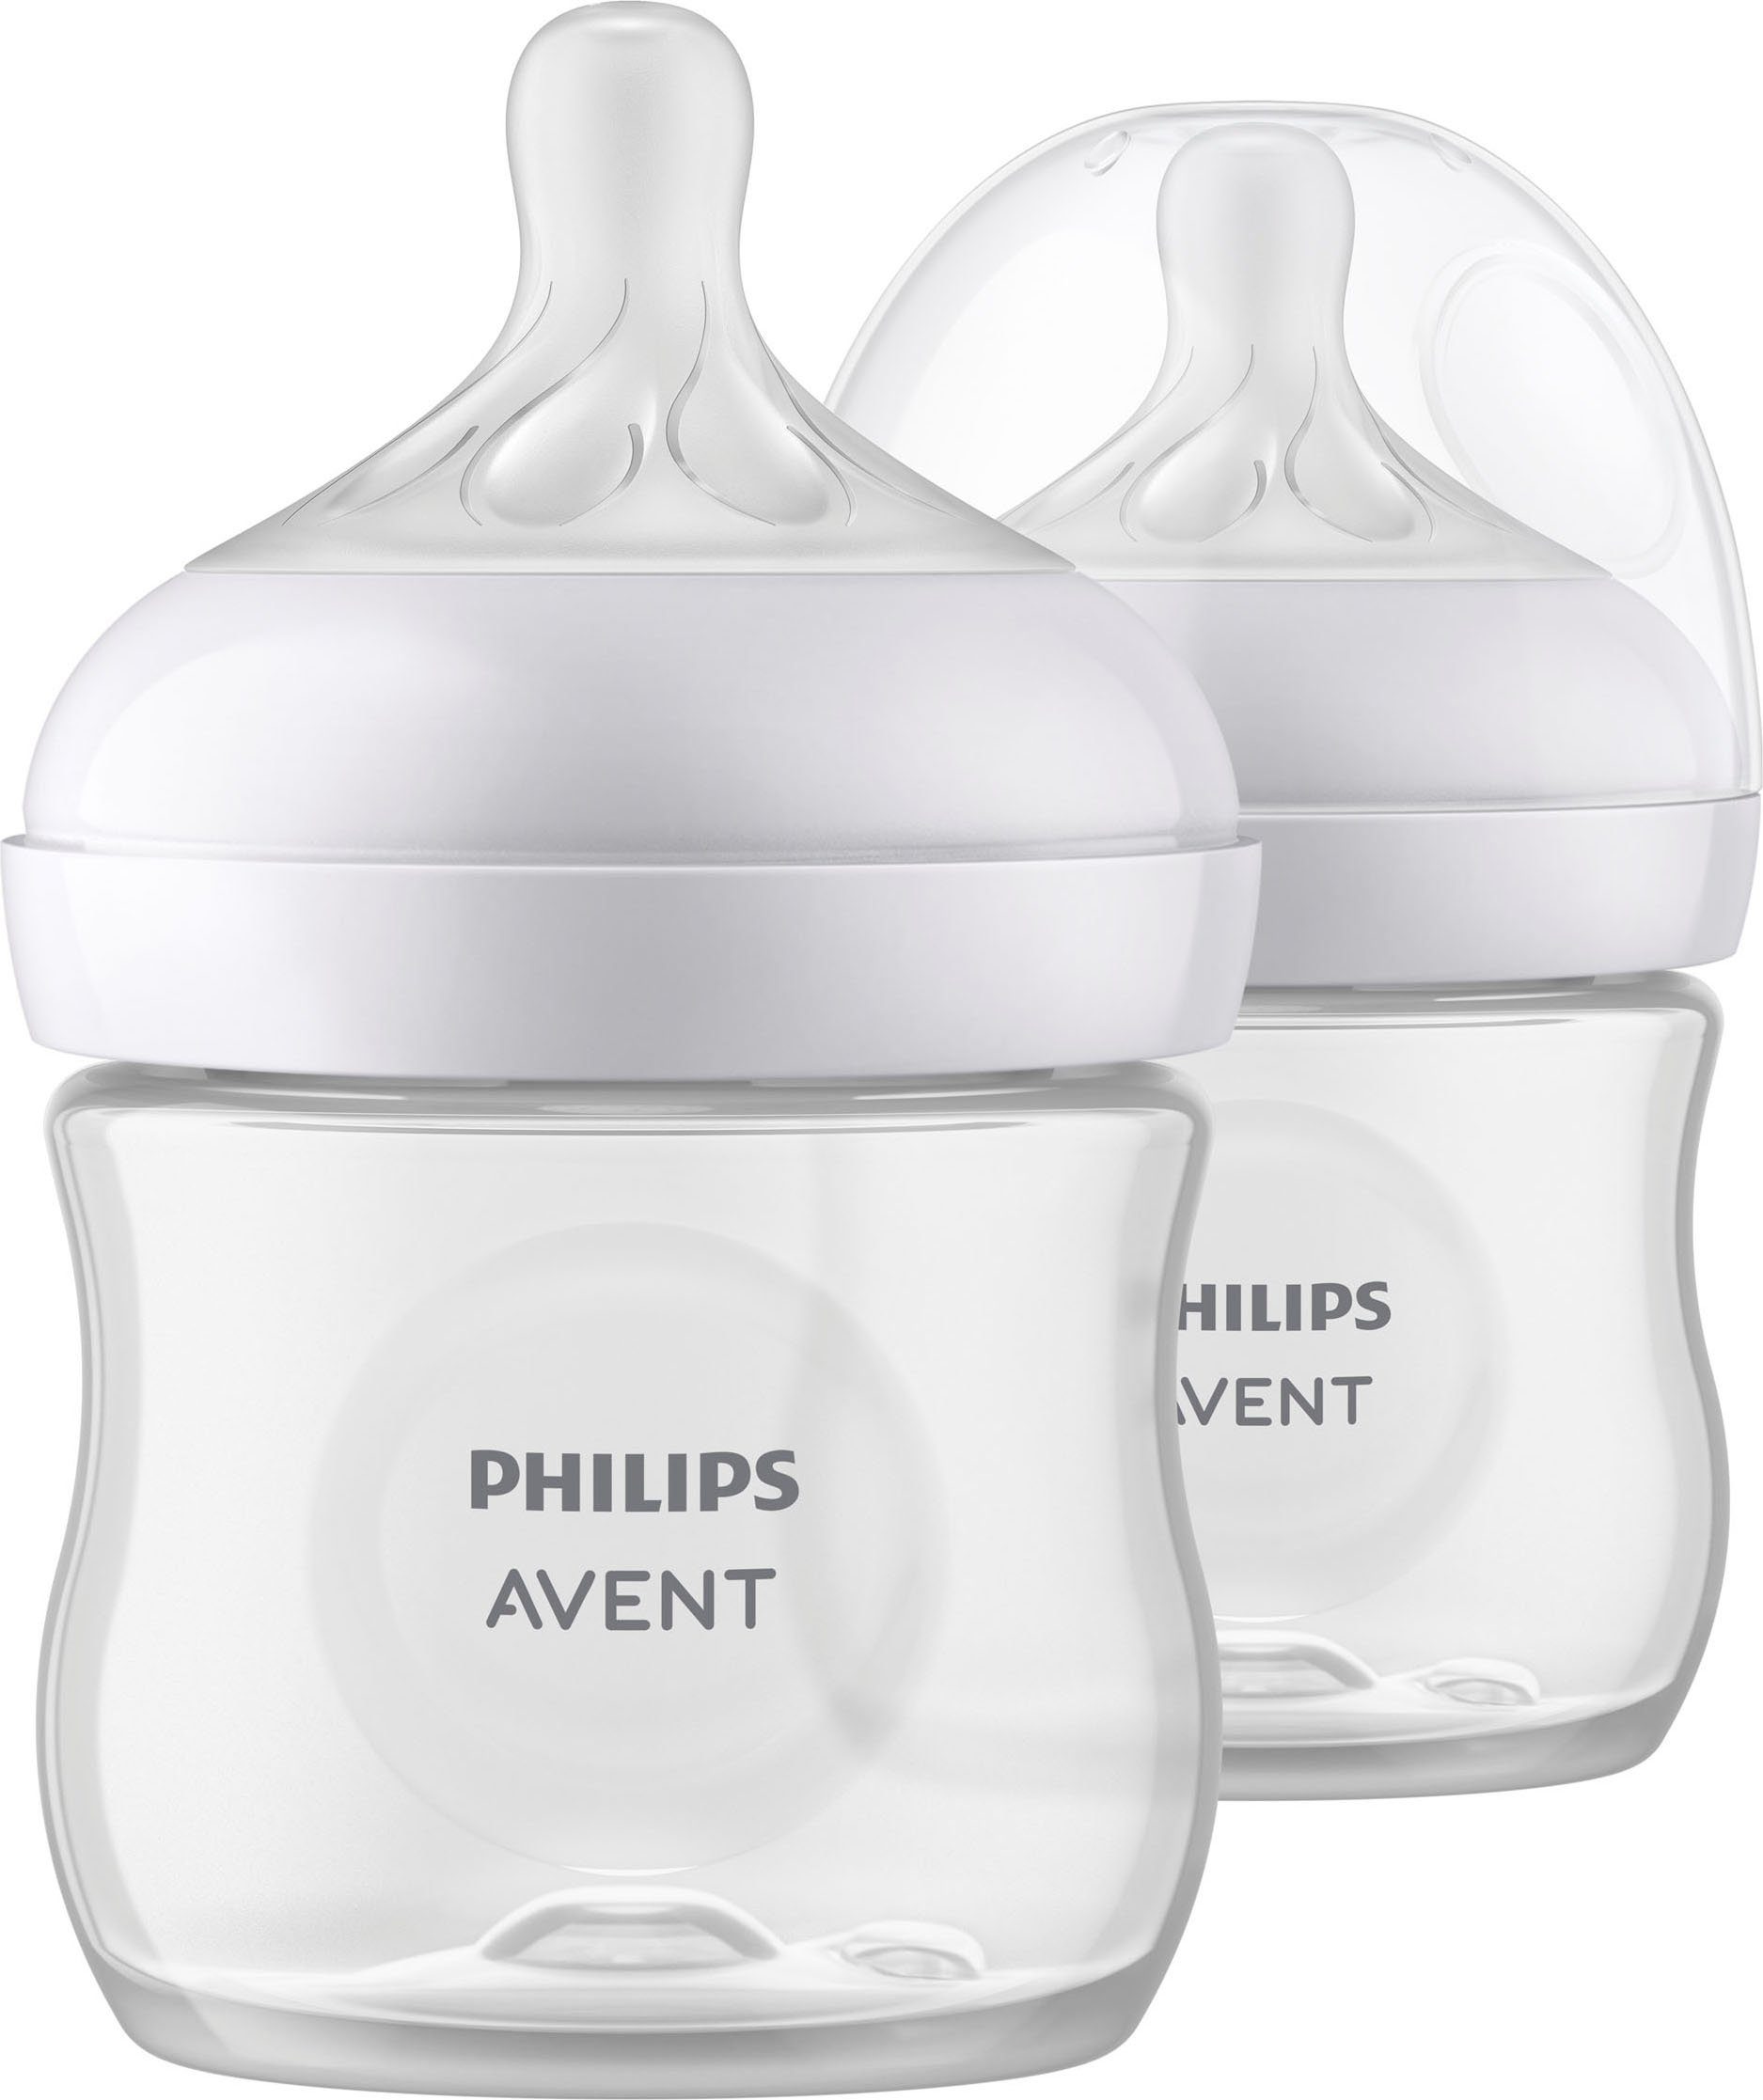 Philips AVENT Babyflasche SCY900/02, 125 ml, 2 ab Stück, 0 Response Natural Monaten